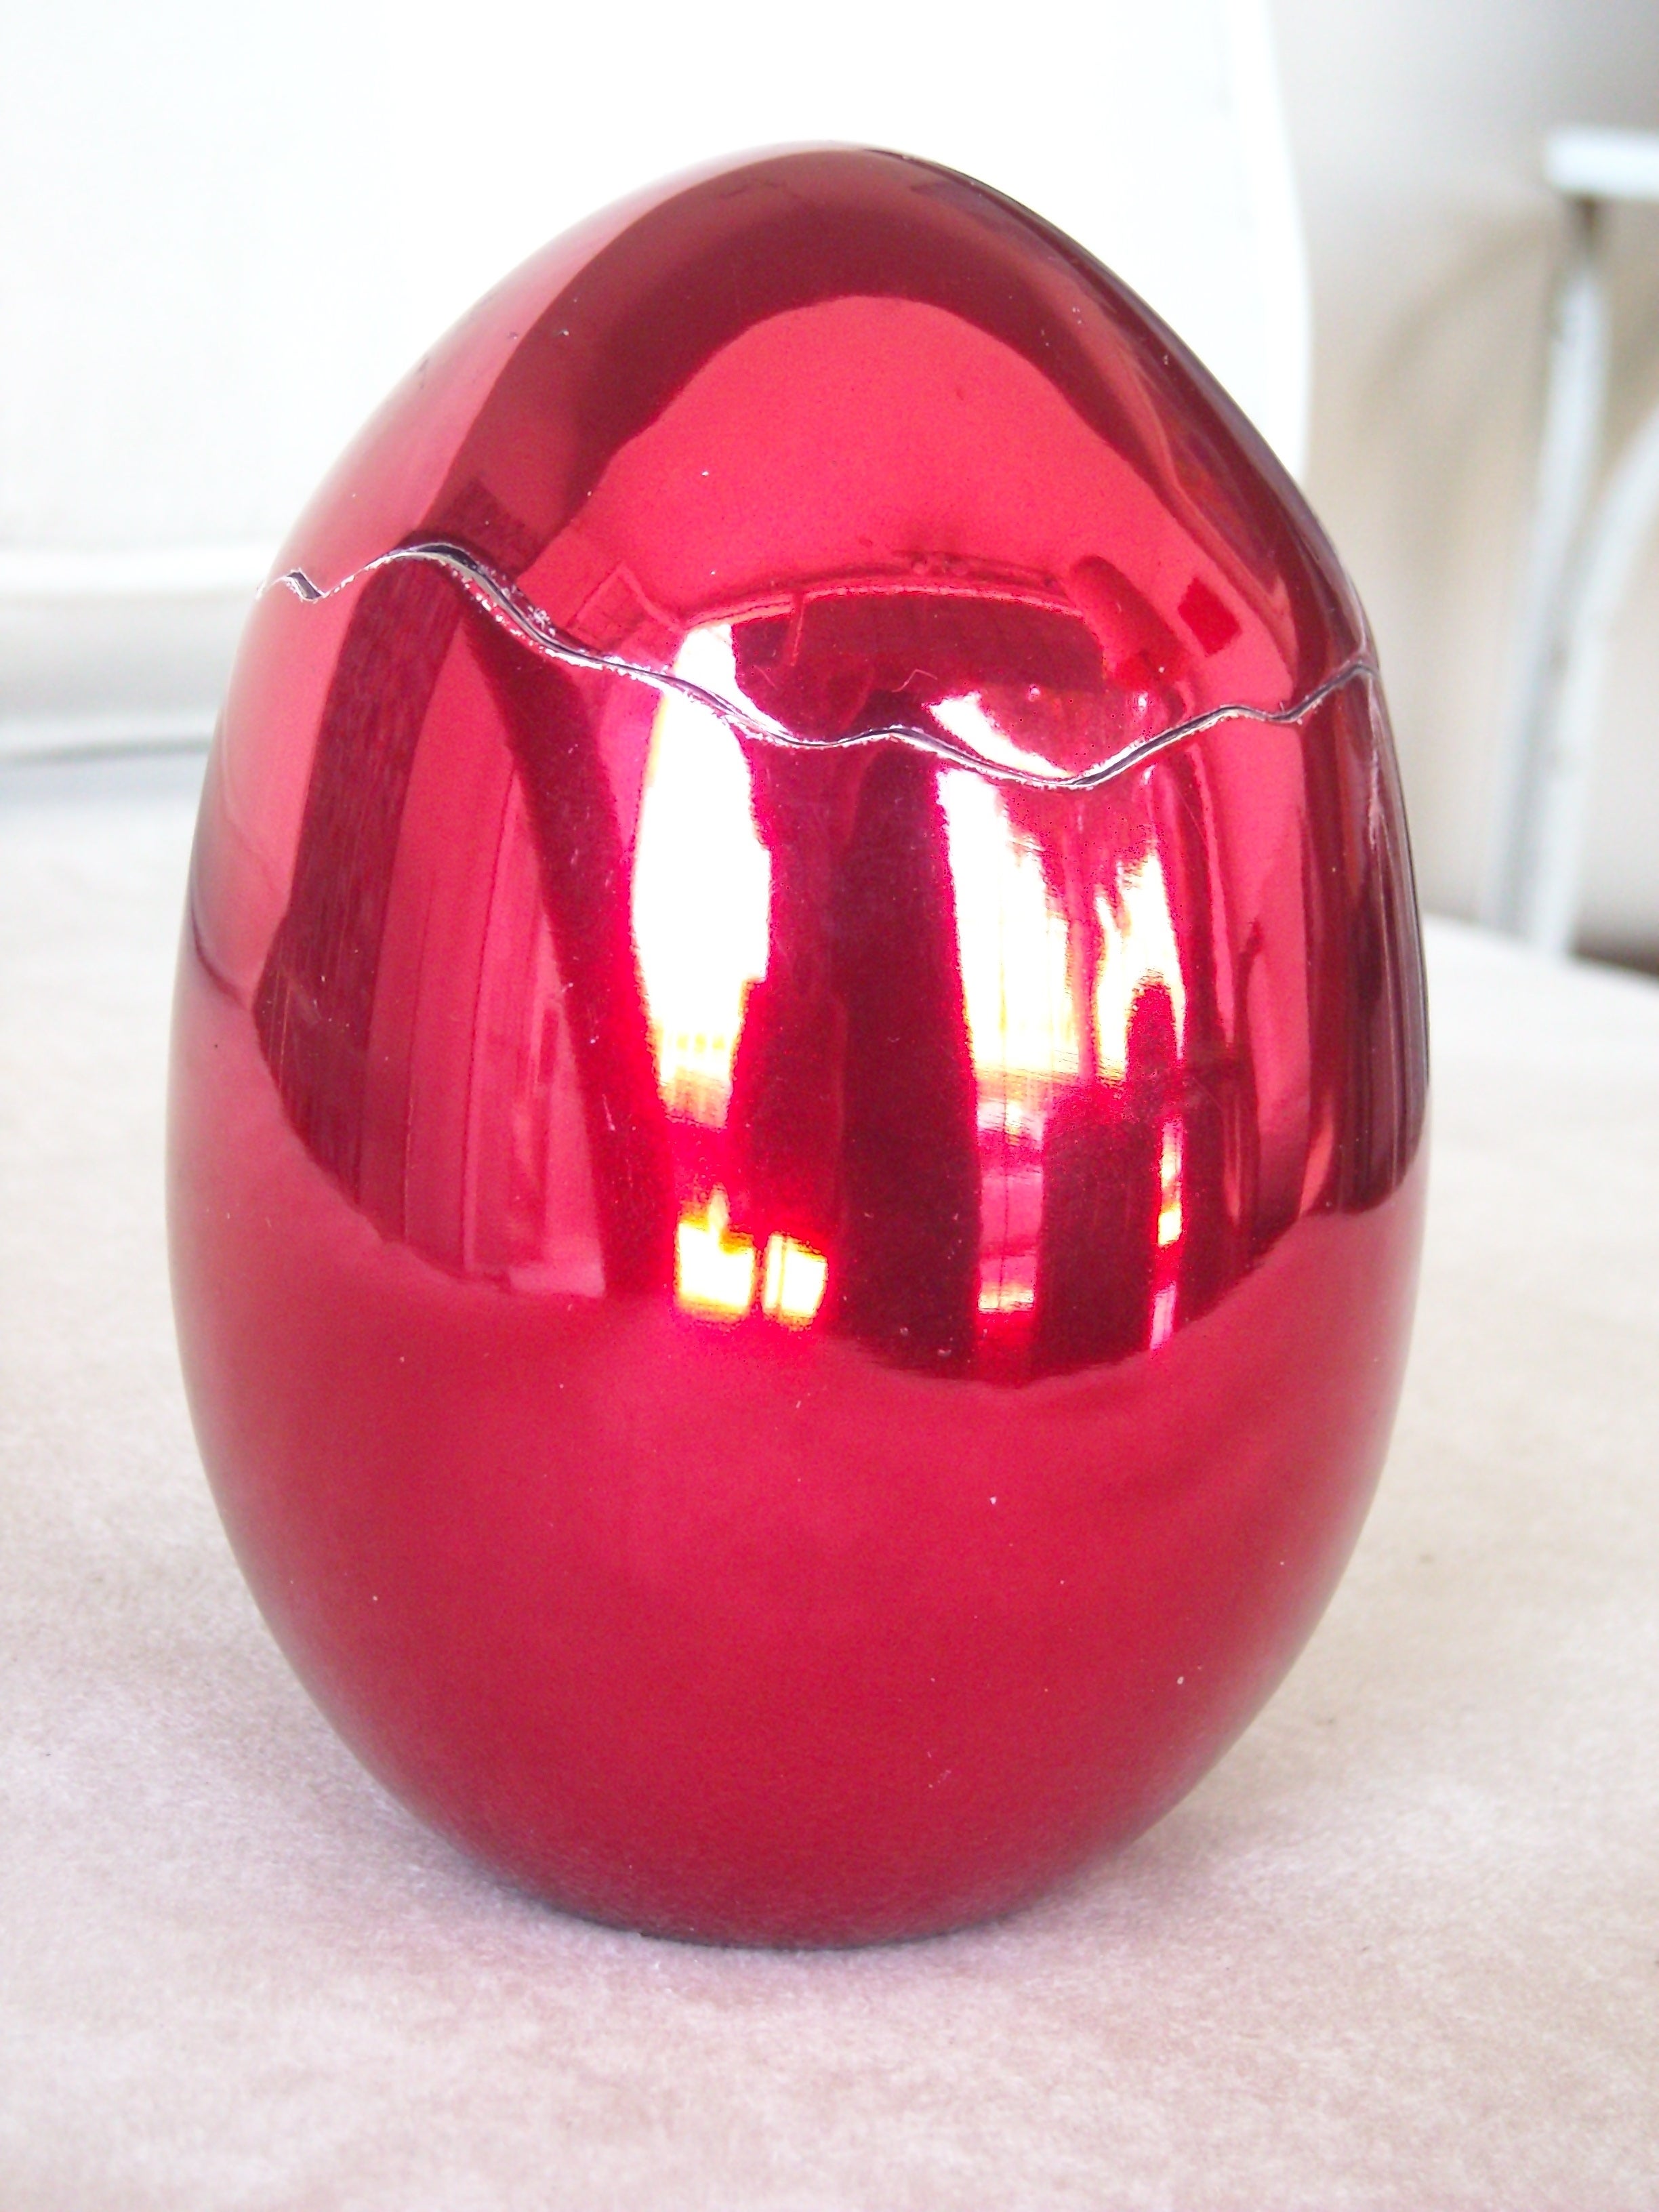 Jeff Koons "Cracked Egg (Red)"Sculpture BCAM BORN 2/9/08